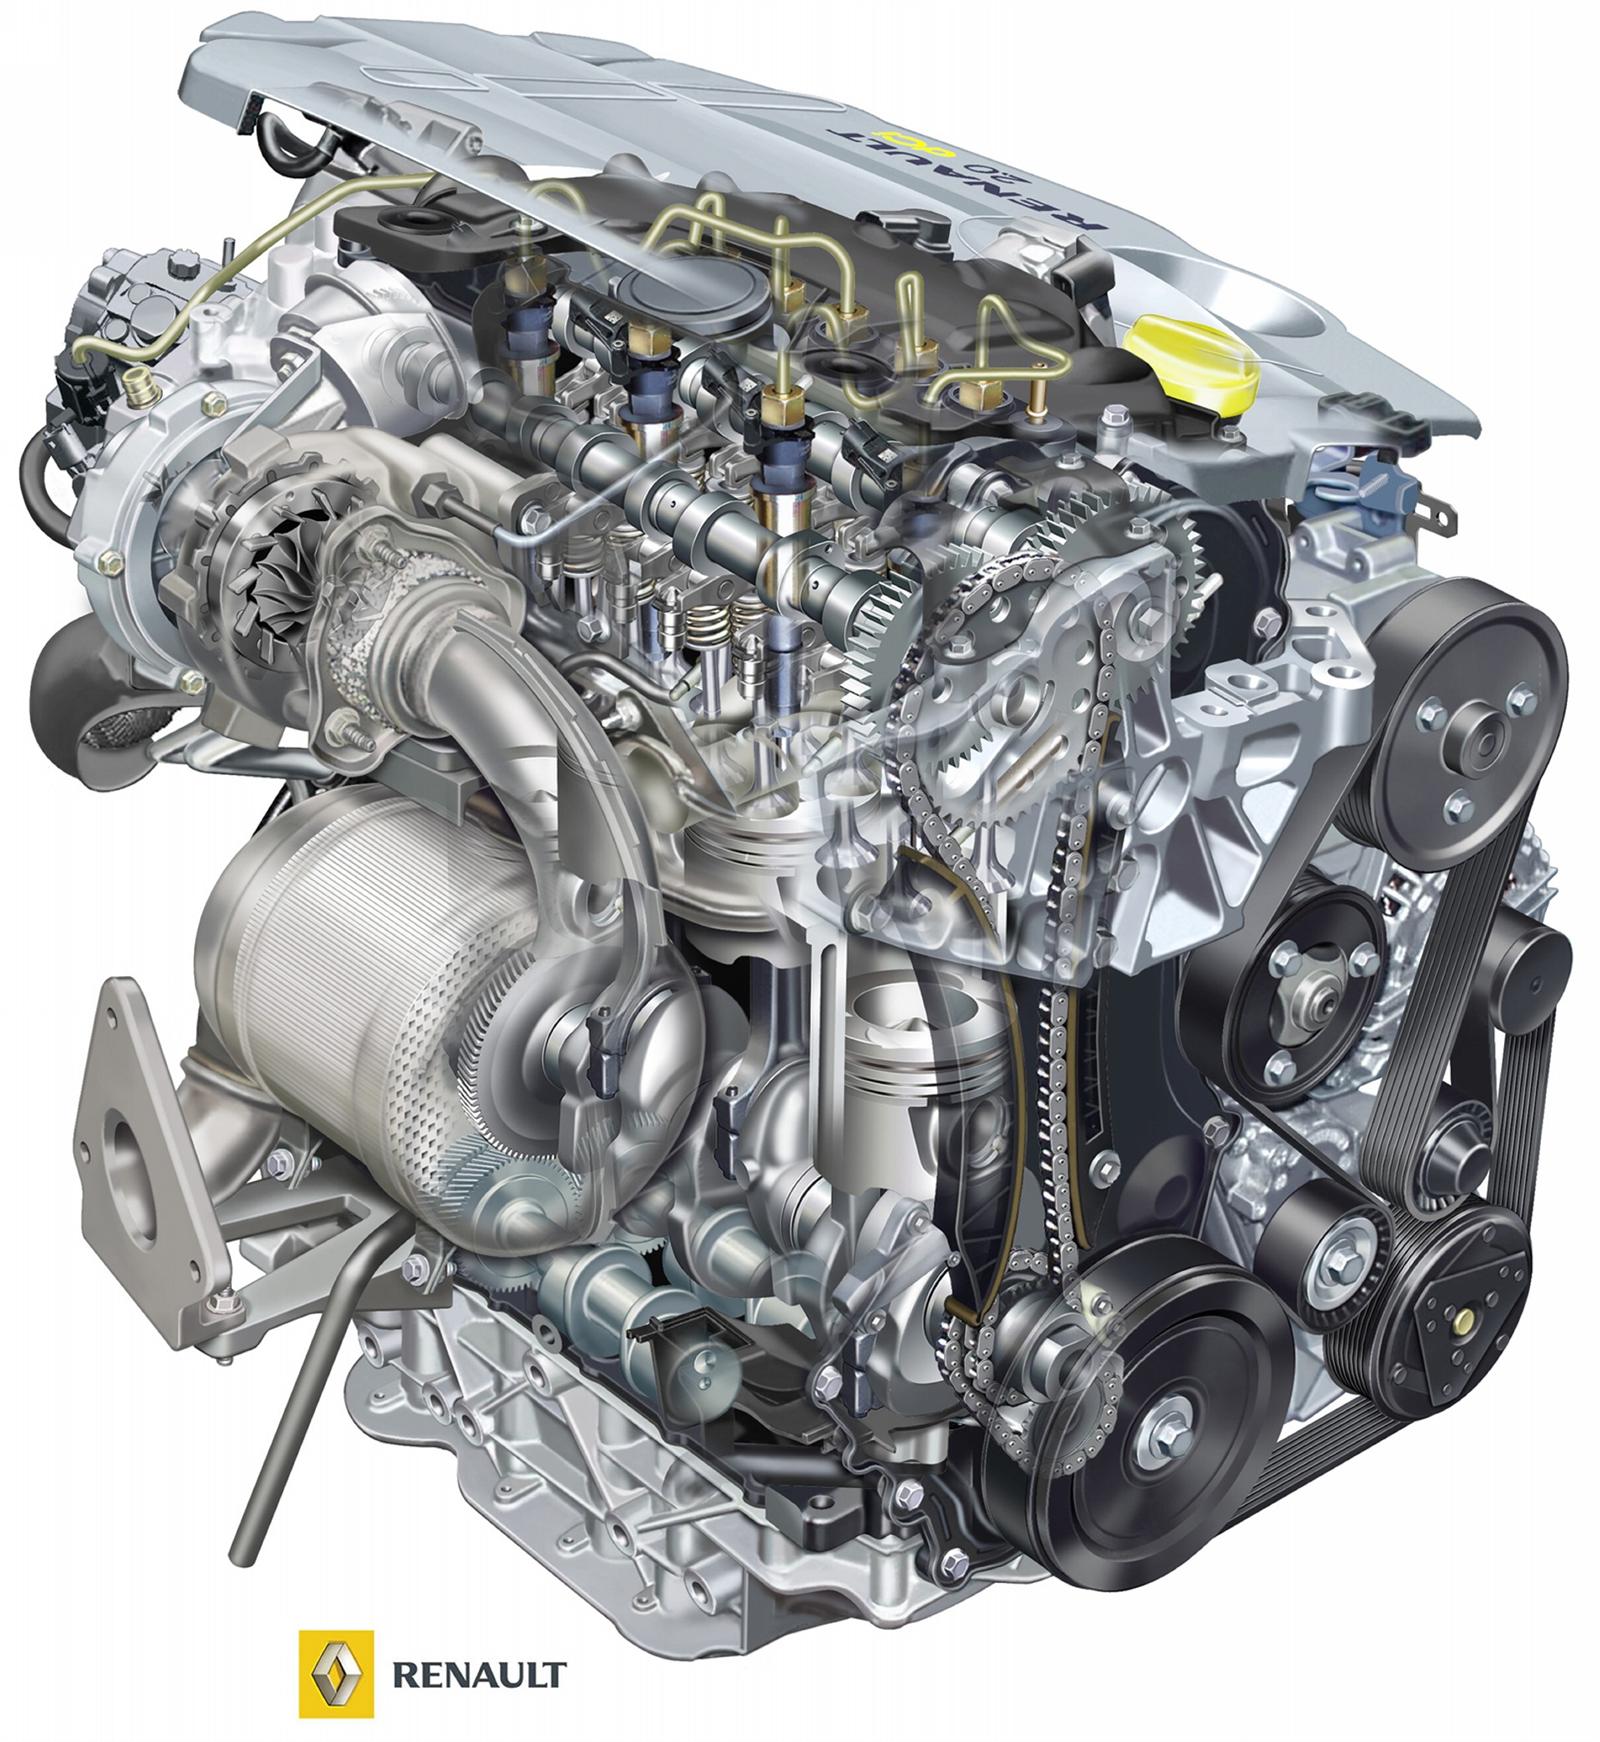 Renault 2.5. Мотор m9r 2.0 DCI. Двигатель Рено Лагуна m9r. Рено мотор 2.0 дизель. R9m 1.6 DCI 130л.с.